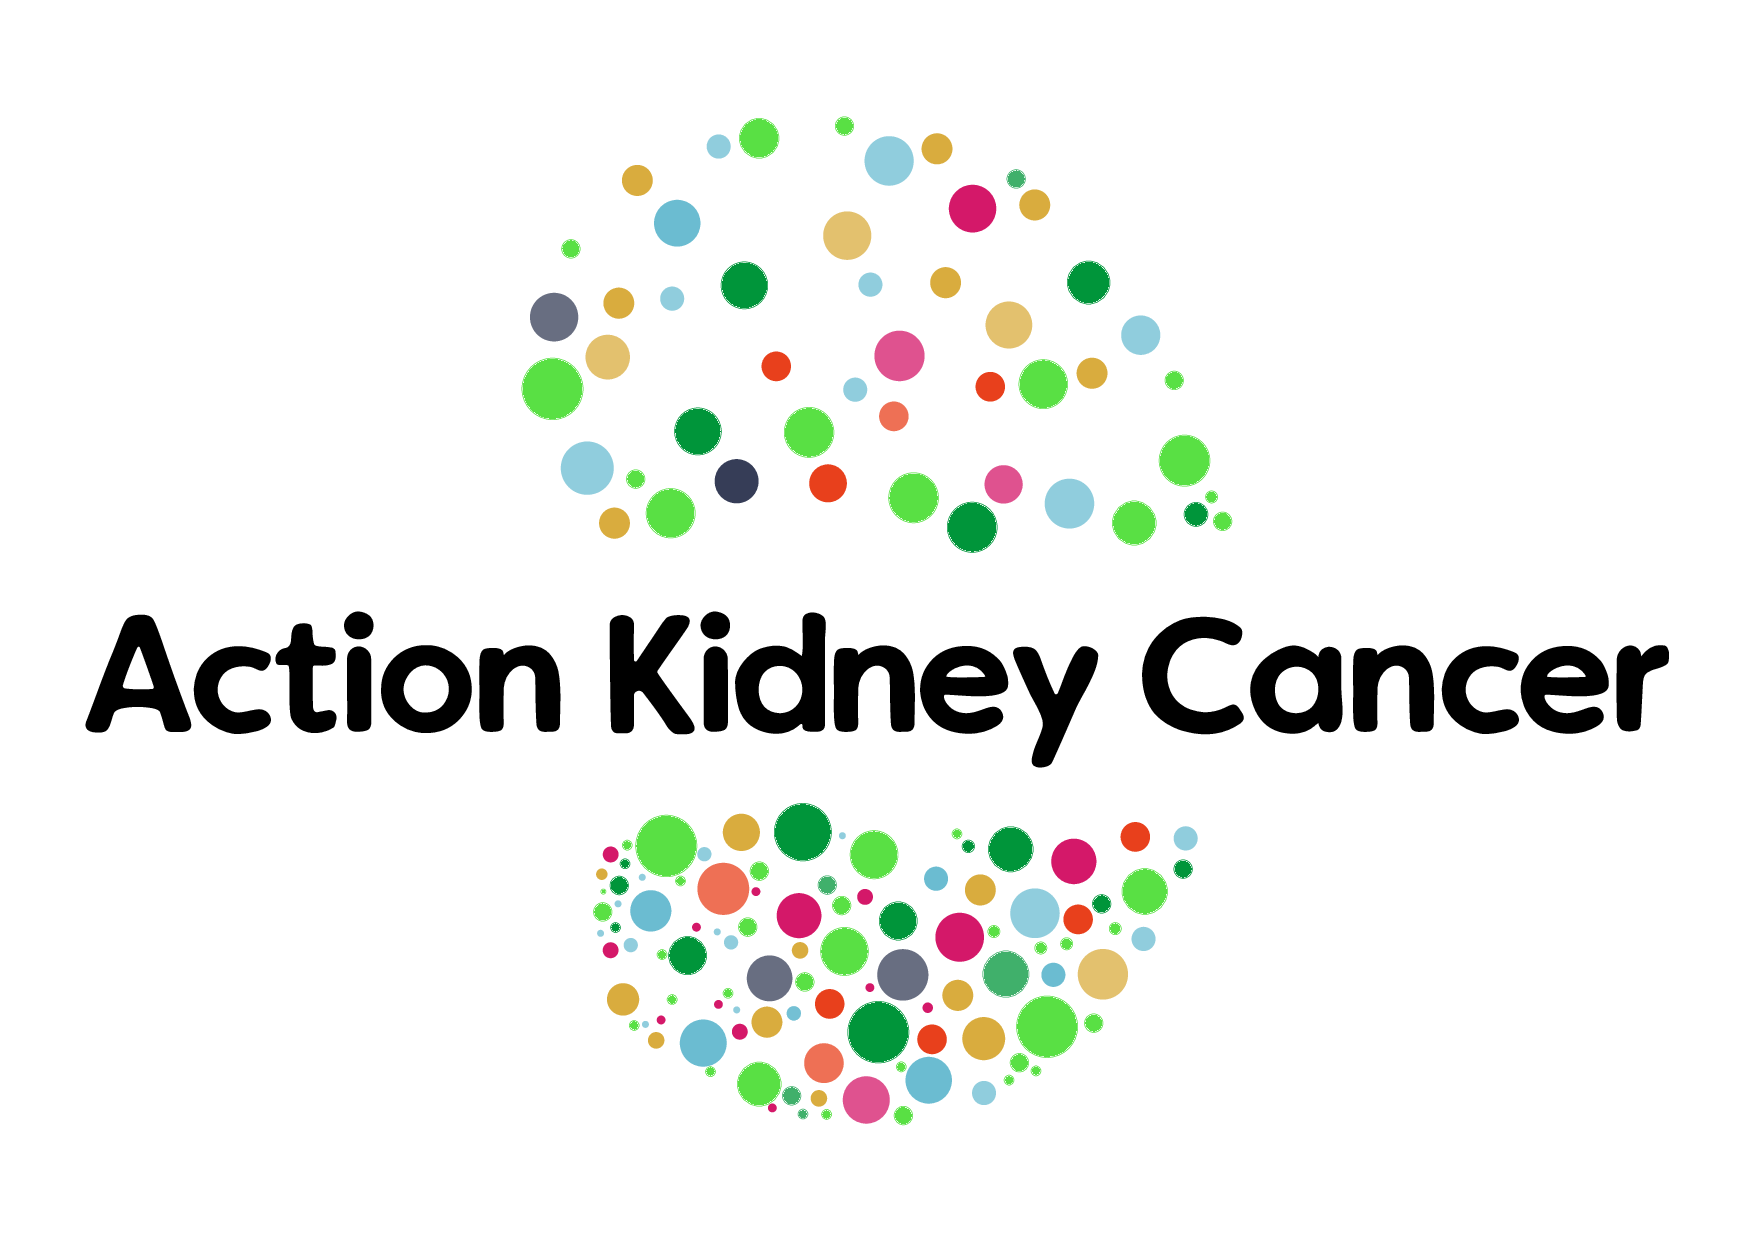 Action Kidney Cancer